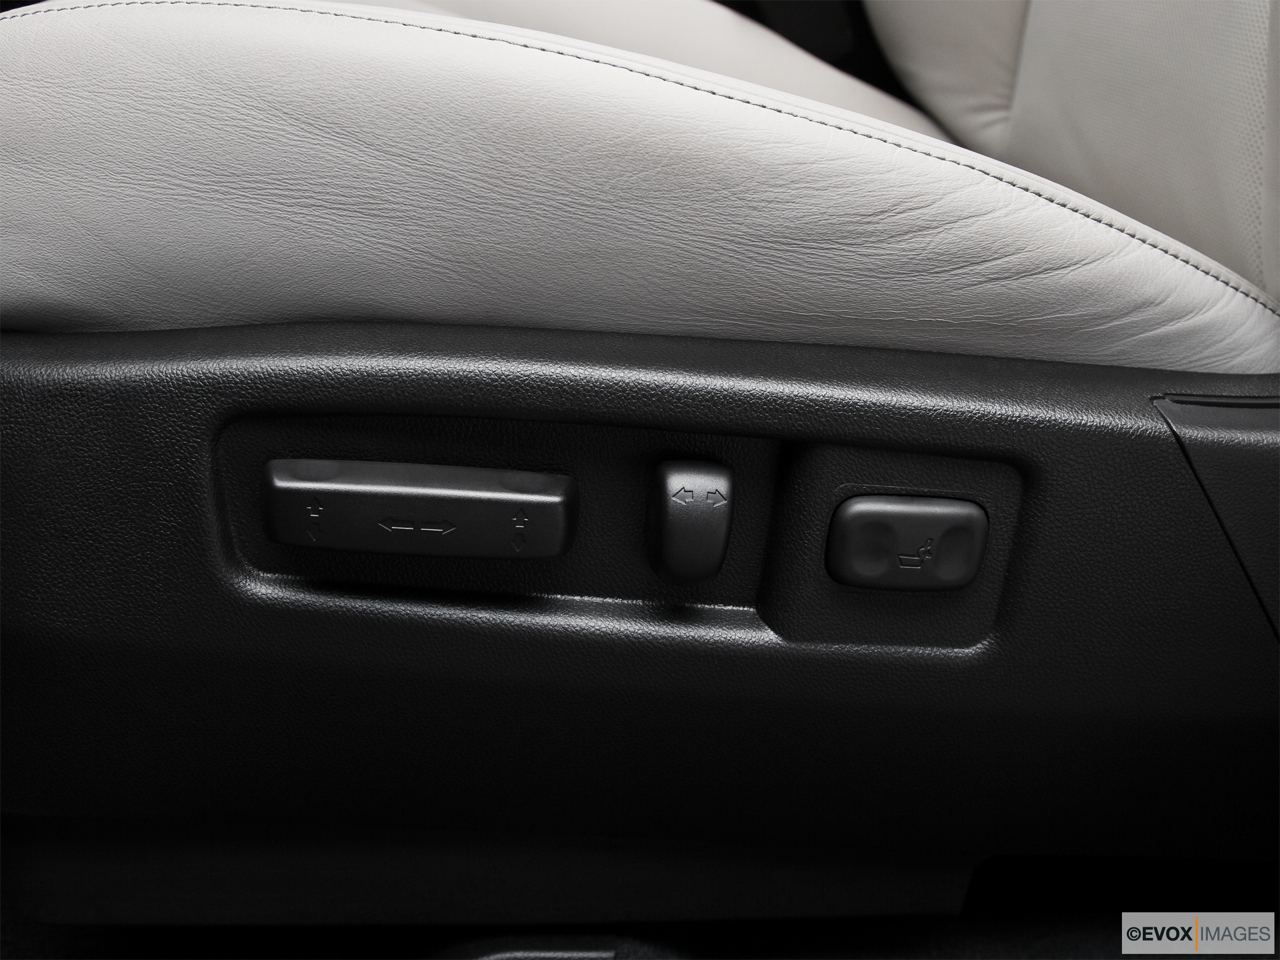 2010 Acura MDX MDX Seat Adjustment Controllers. 